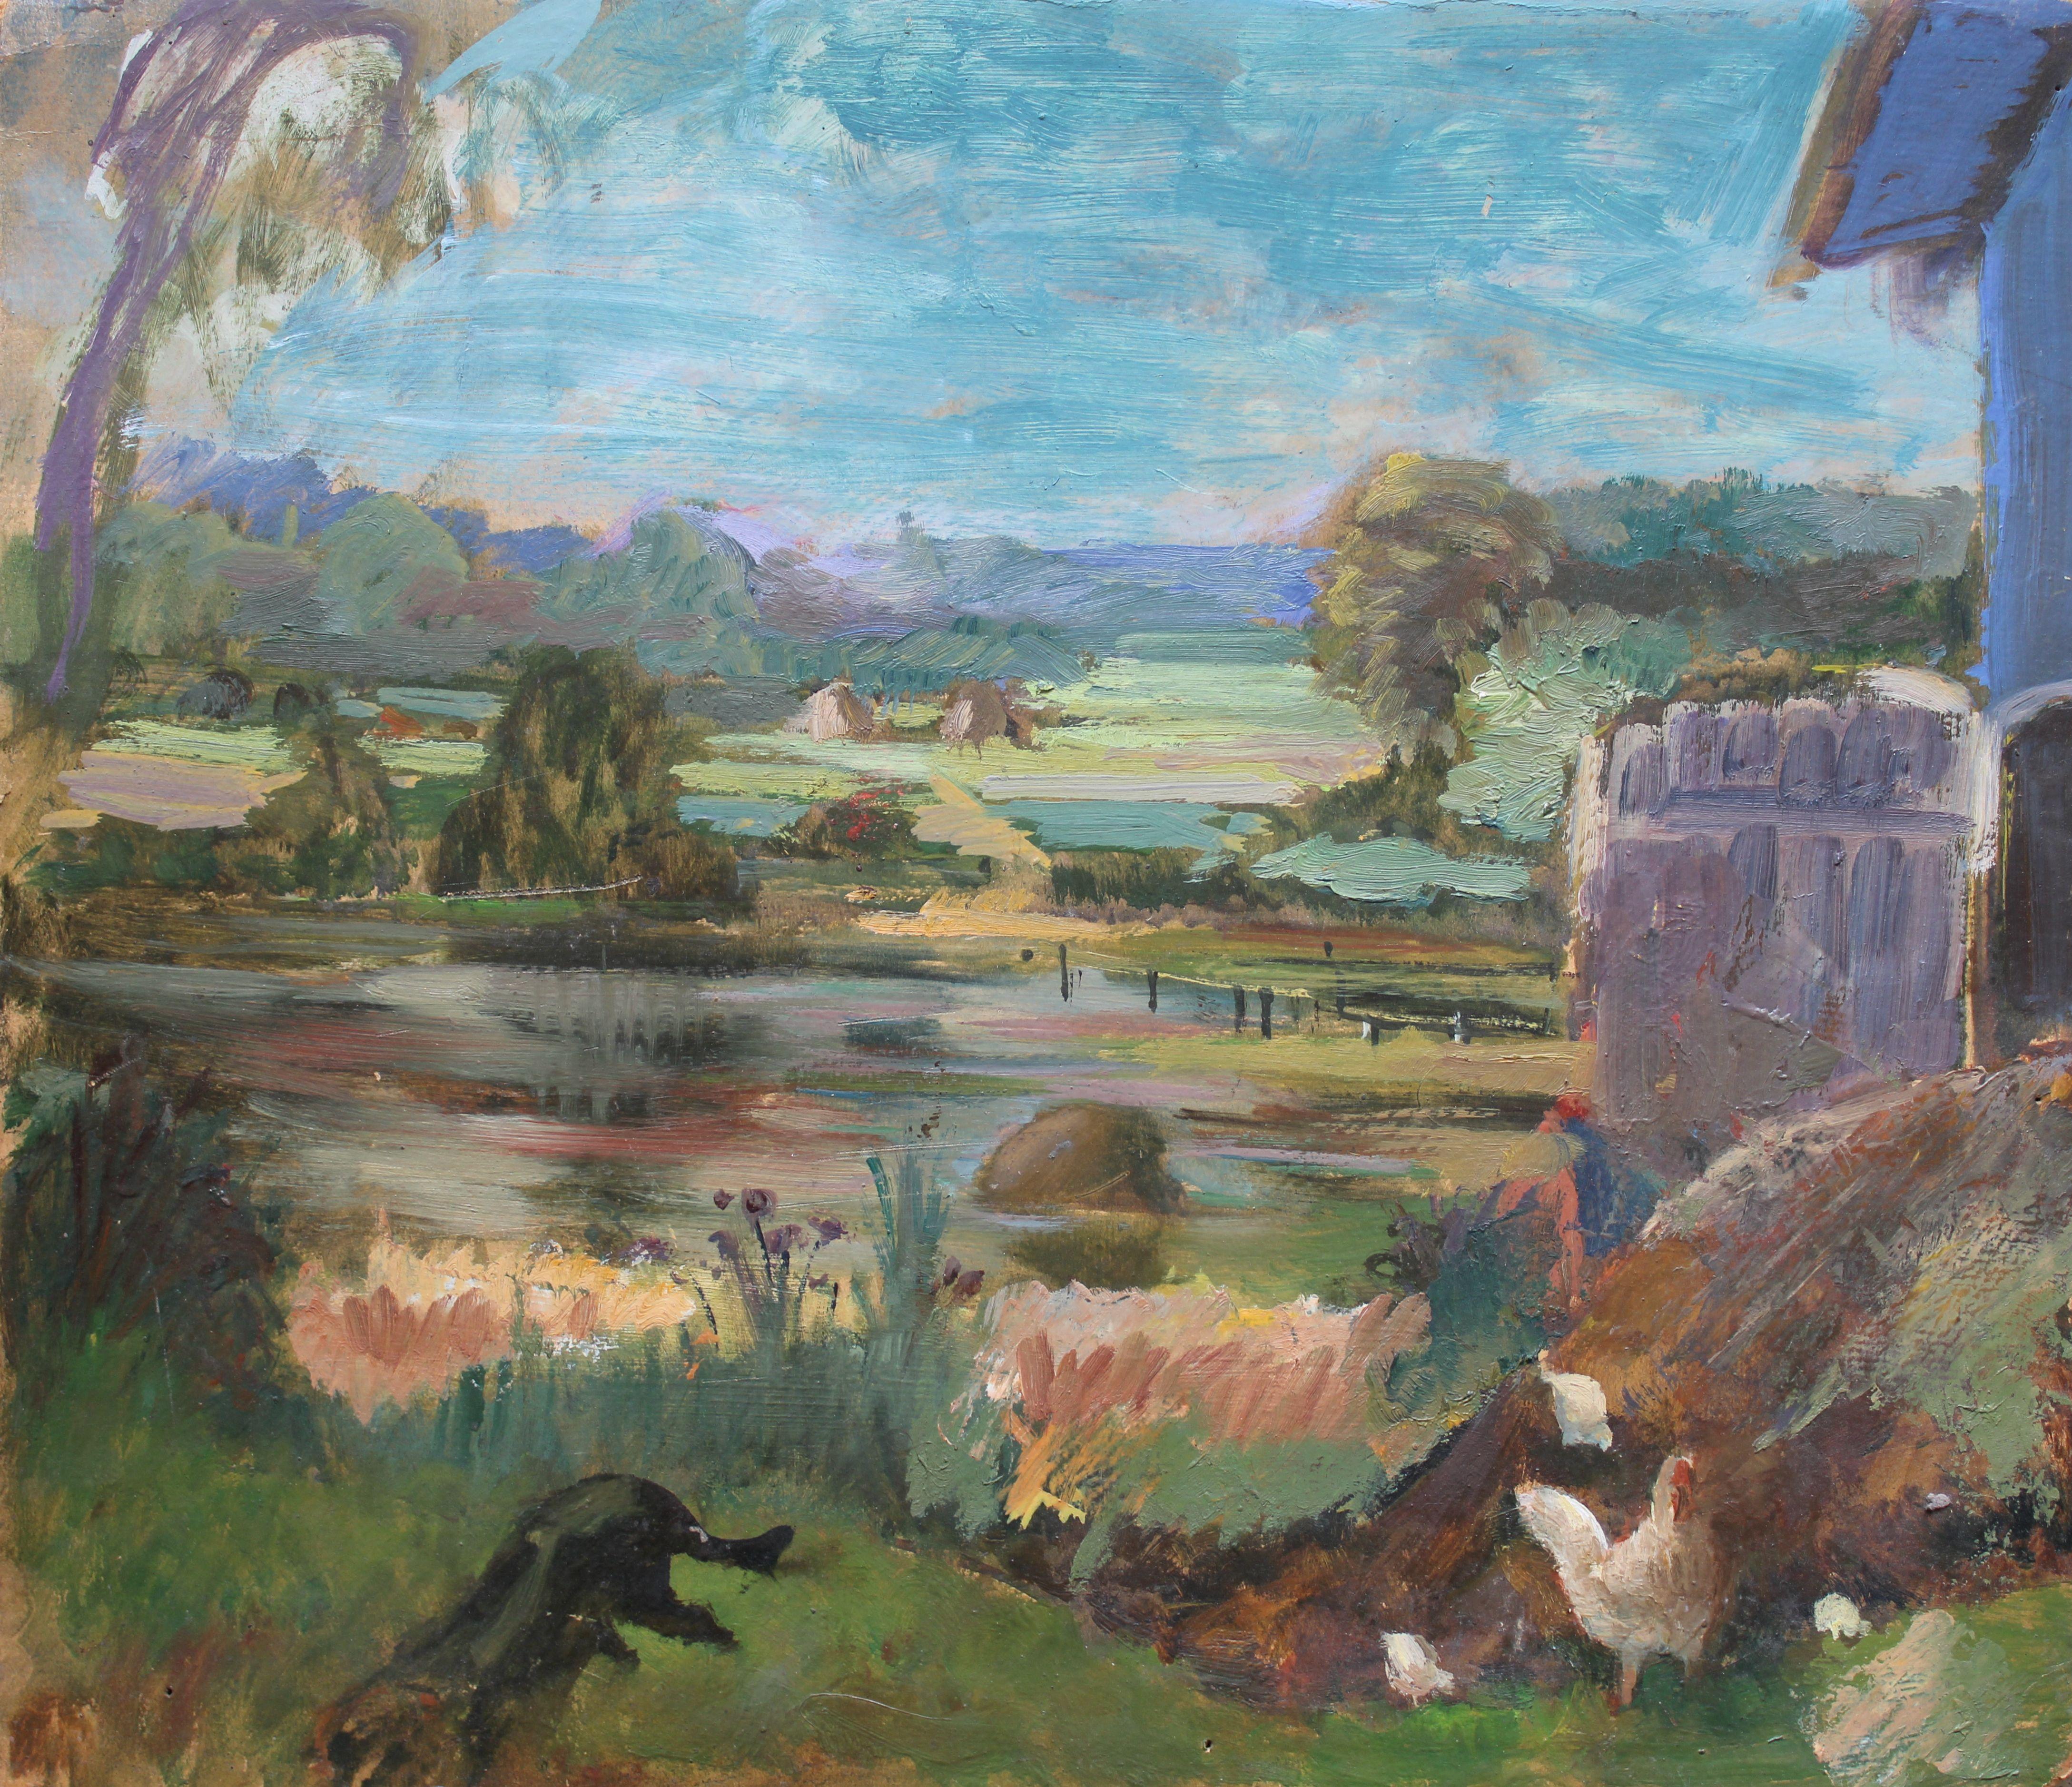 Aleksandra Belcova Landscape Painting - Behind the barn  1950s. Oil on cardboard. 42.5x49.5 cm